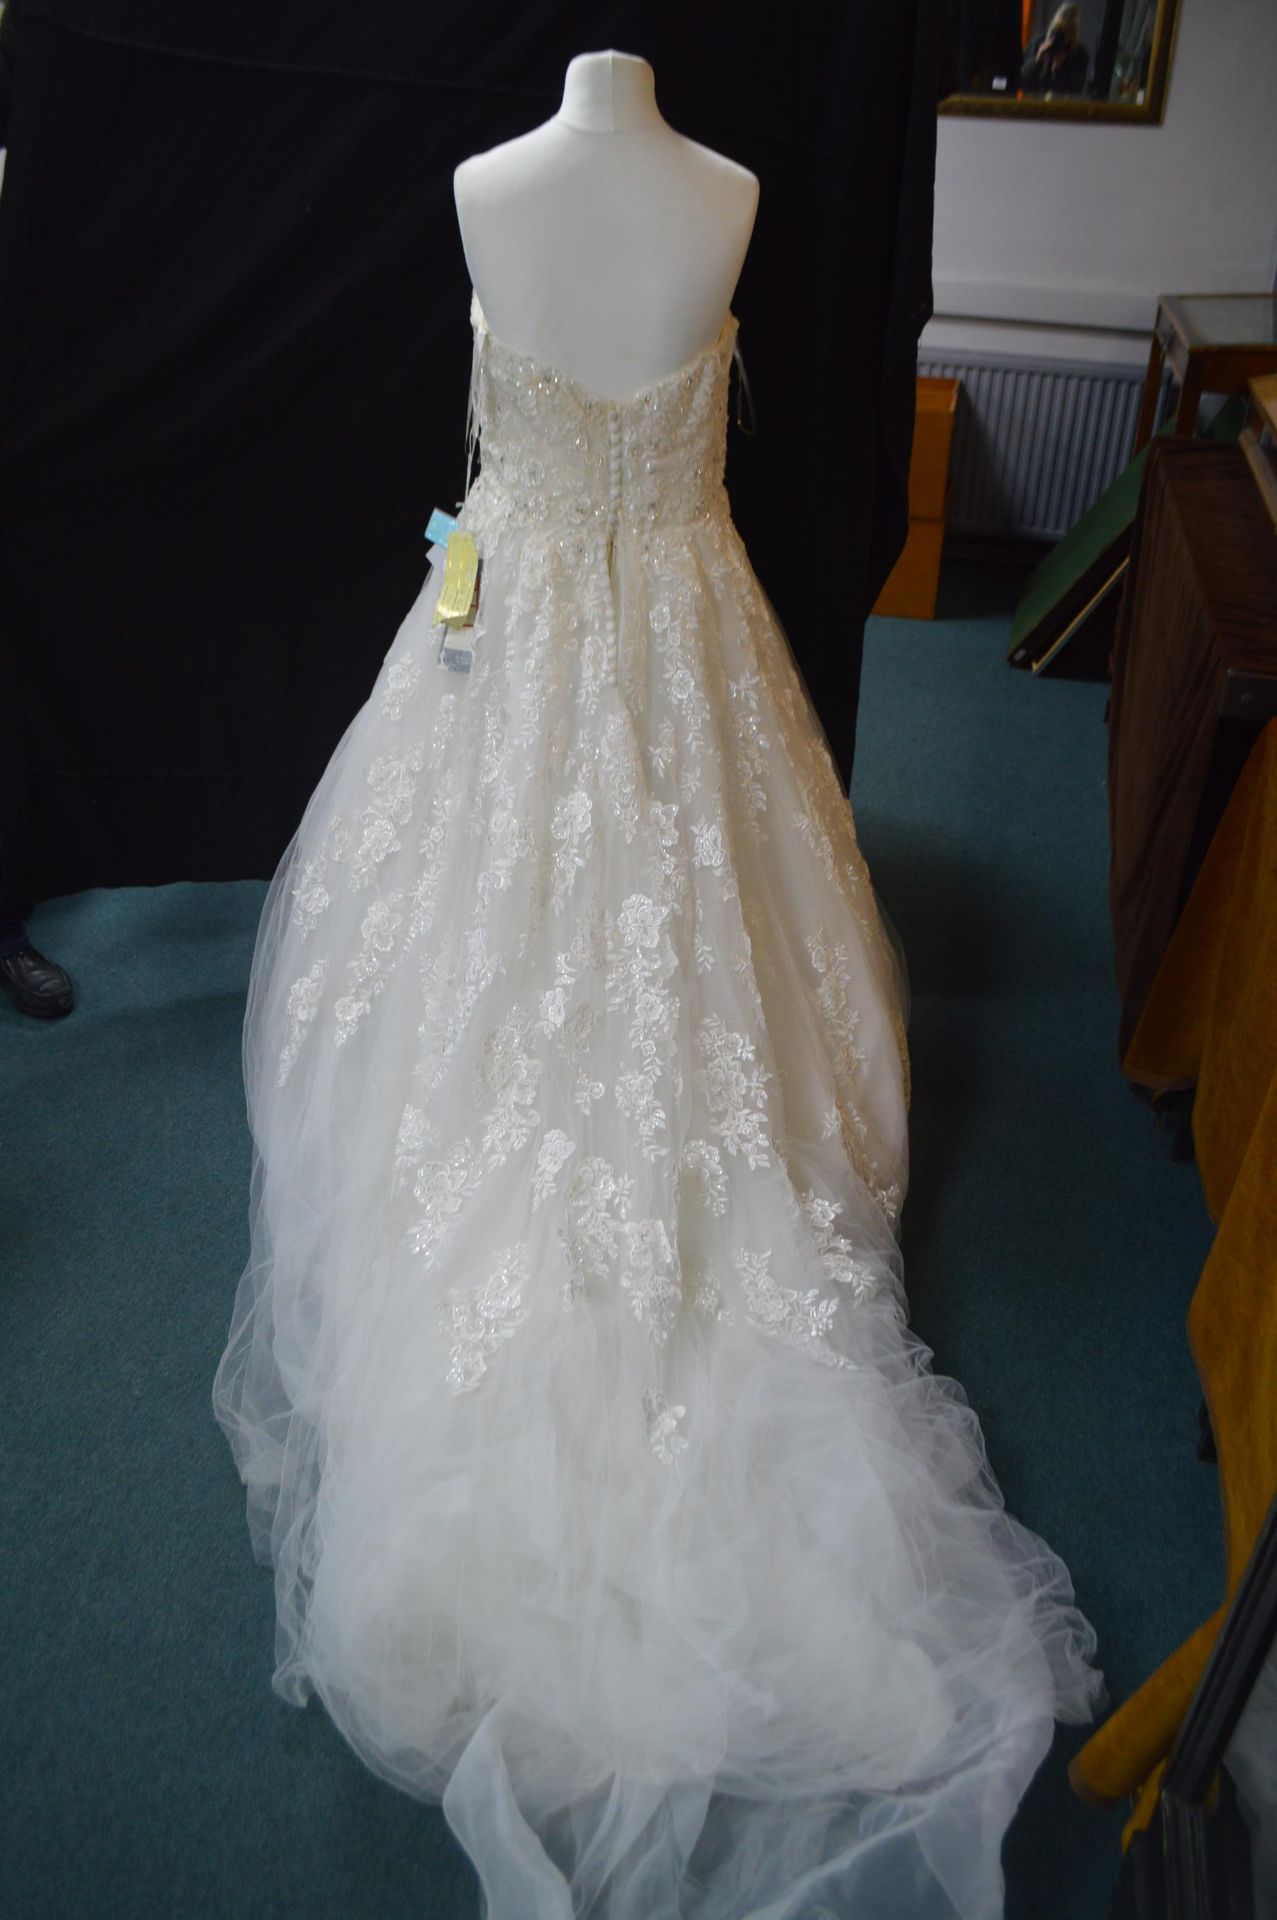 Wedding Dress by Madeline Gardner in Ivory Size: 18 - Image 2 of 4